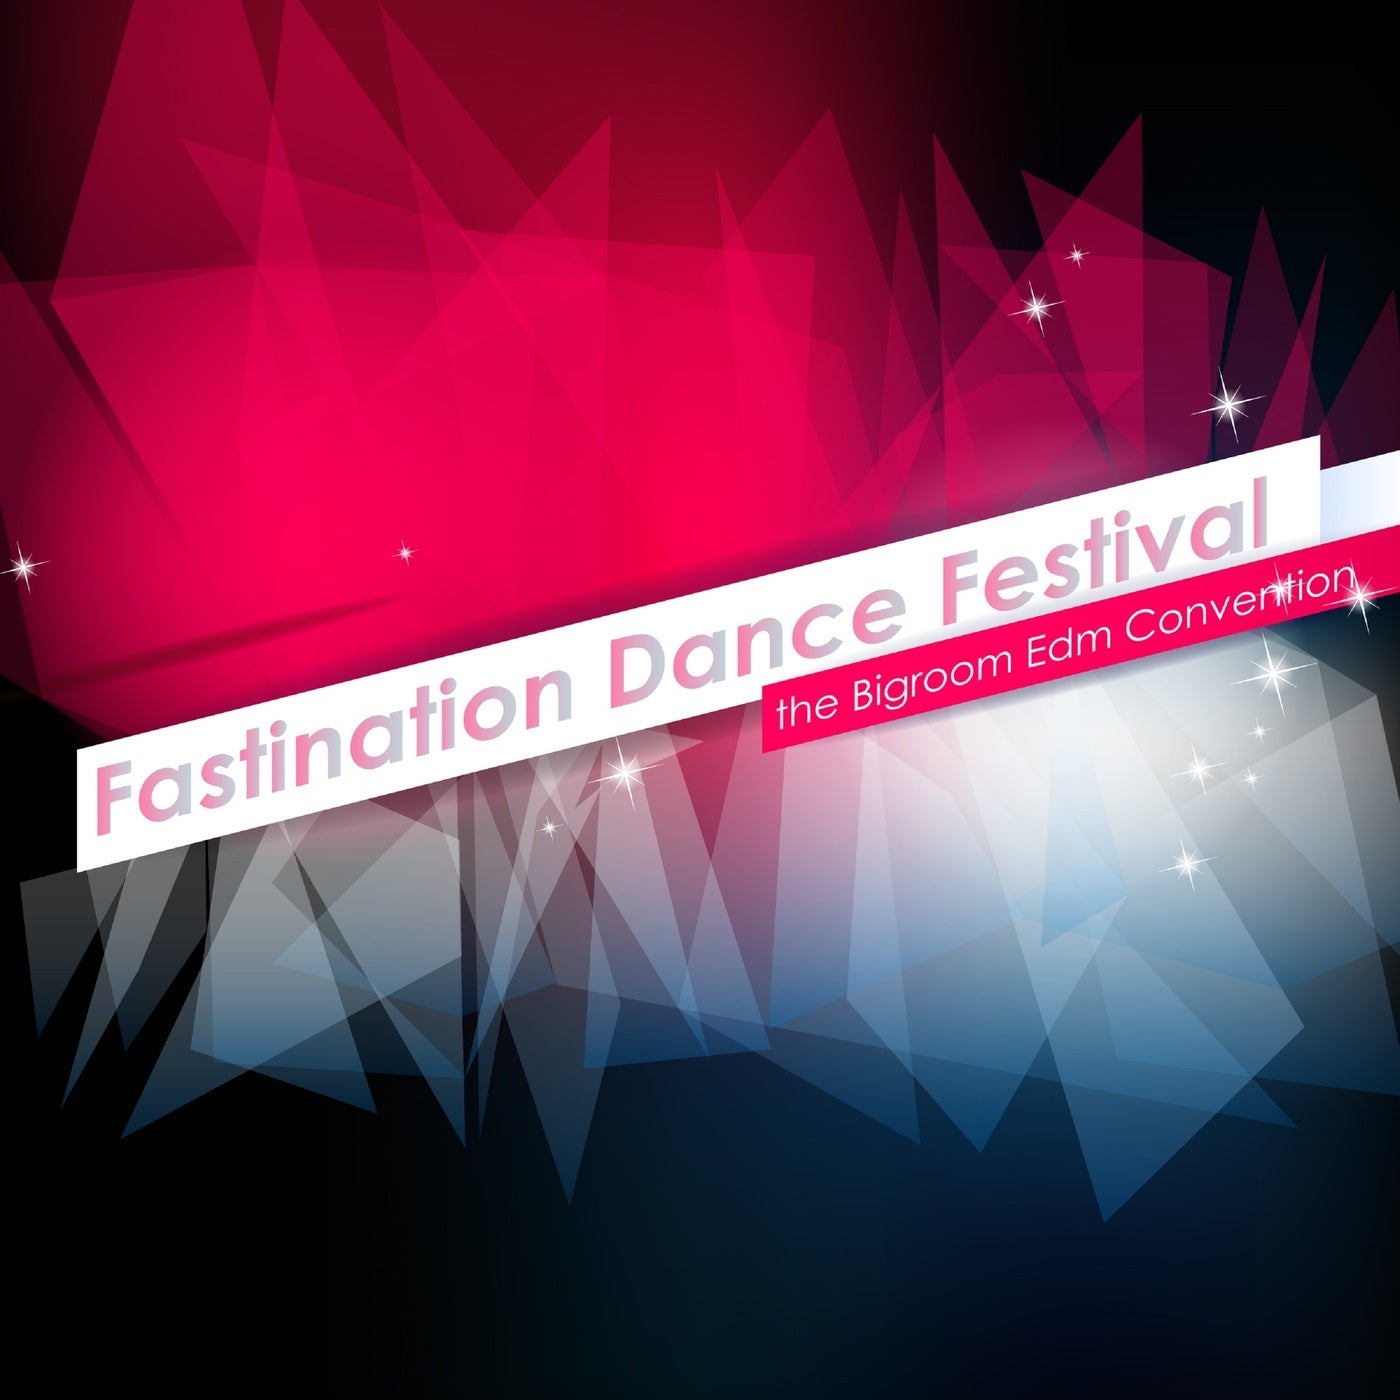 Fastination Dance Festival - the Bigroom EDM Convention